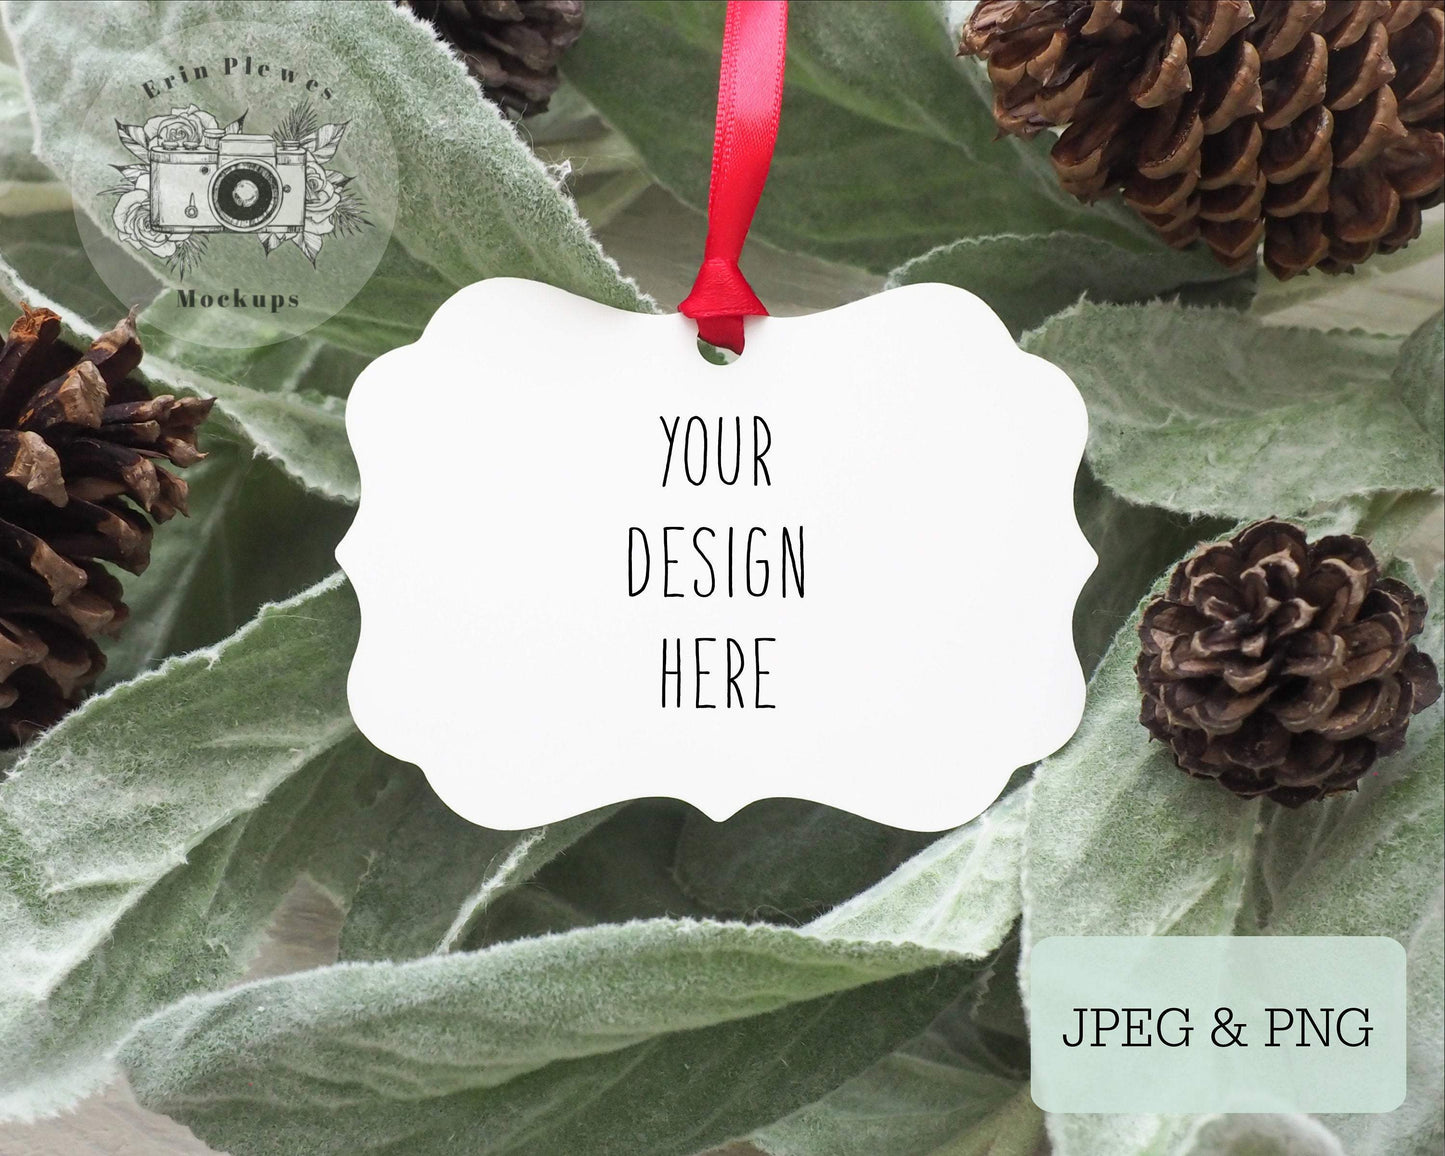 Erin Plewes Mockups Benelux Christmas Ornament Mockup, Benelux aluminum ornament mock-up to add your design, Instant Digital Download JPG PNG Template